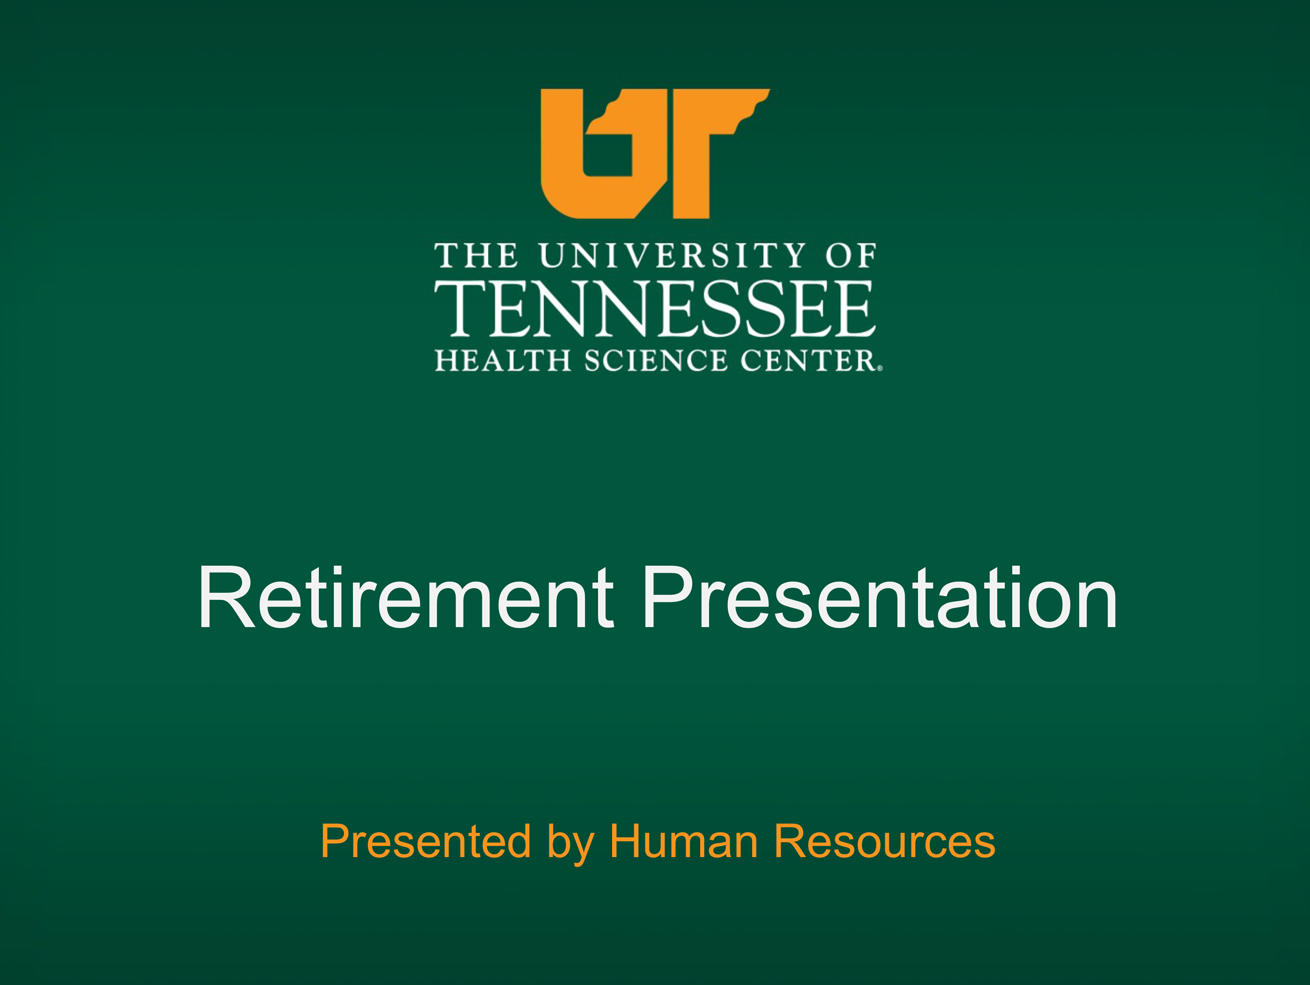 UTHSC Human Resources presents their Retirement Presentation